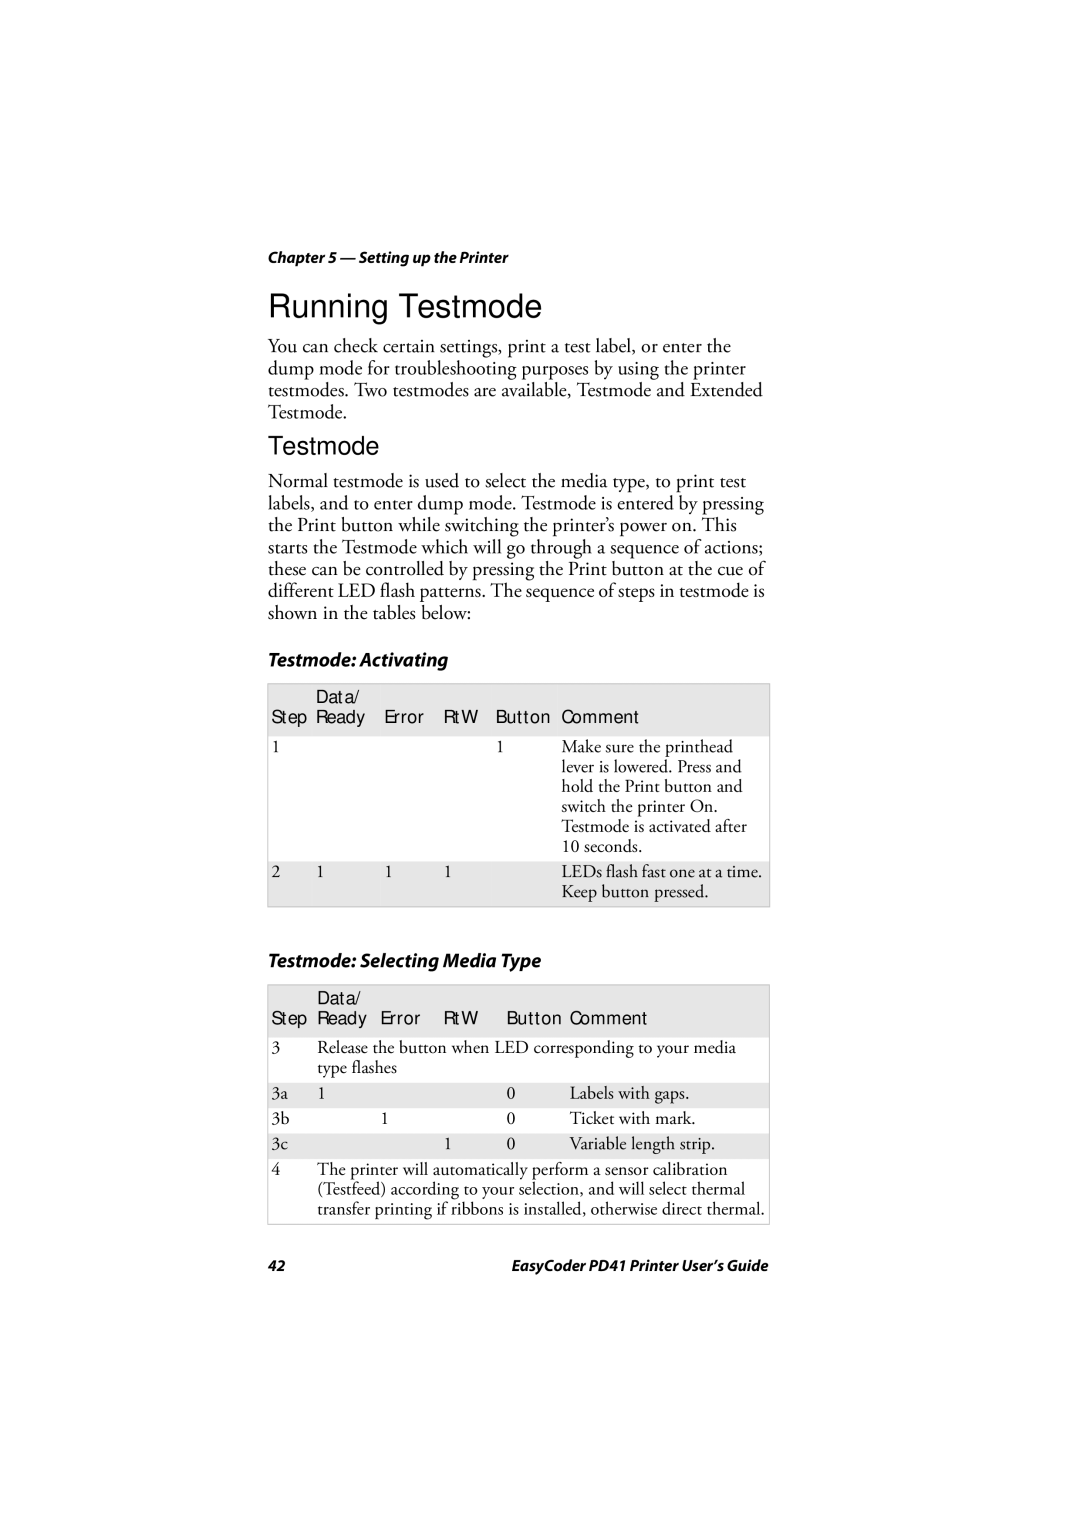 Intermec PD41 manual Running Testmode, Testmode Activating, Testmode Selecting Media Type 